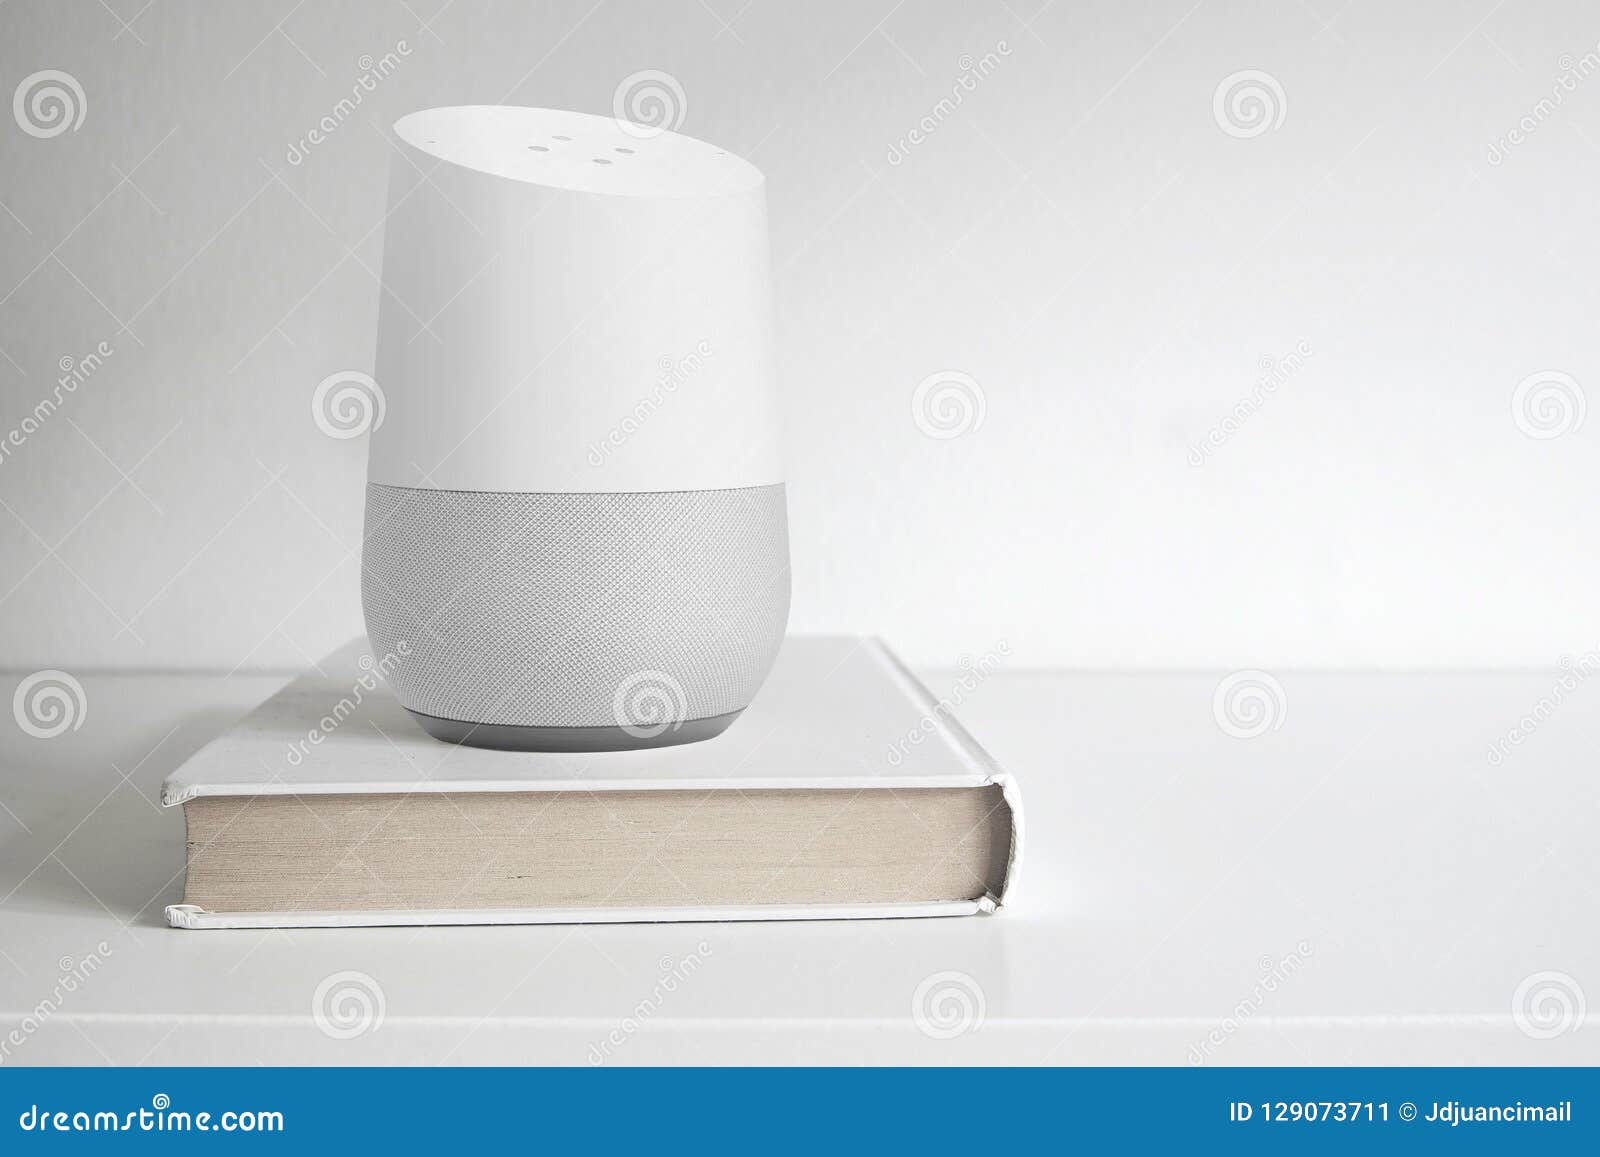 barcelona - september 2018: google home smart speaker on a book on a shelf